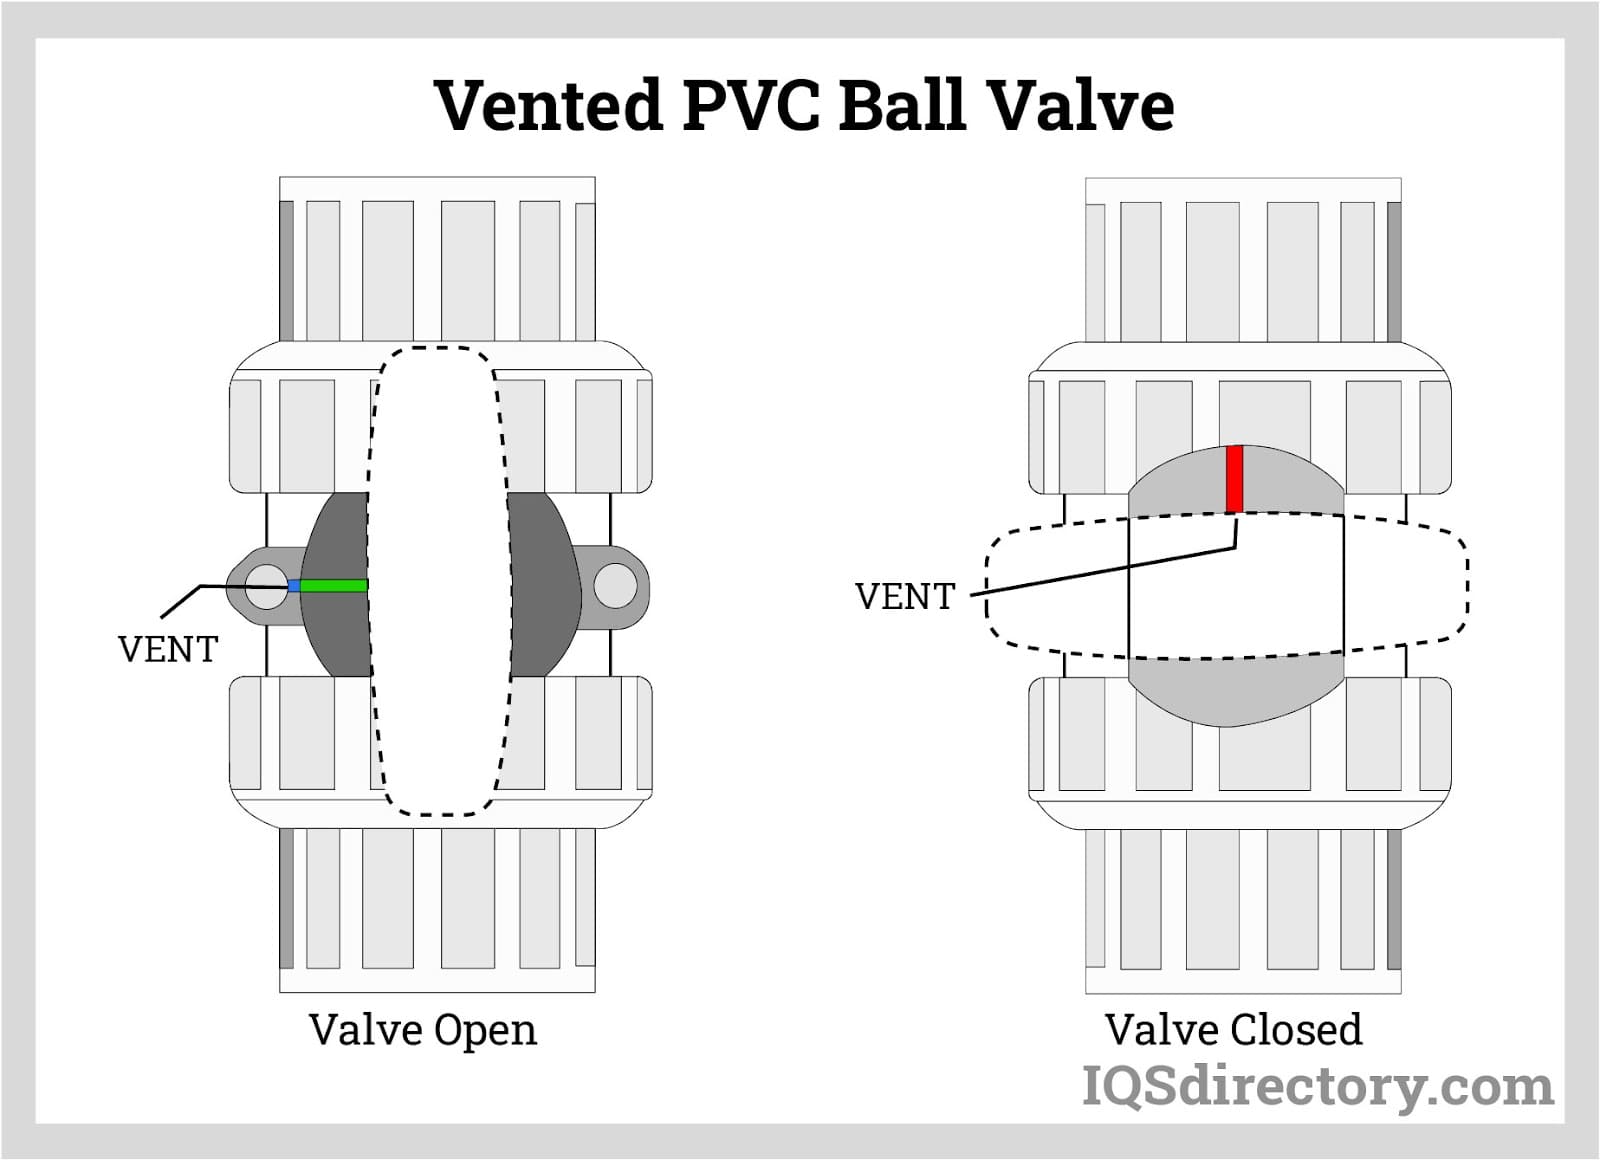 Vented PVC Ball Valve